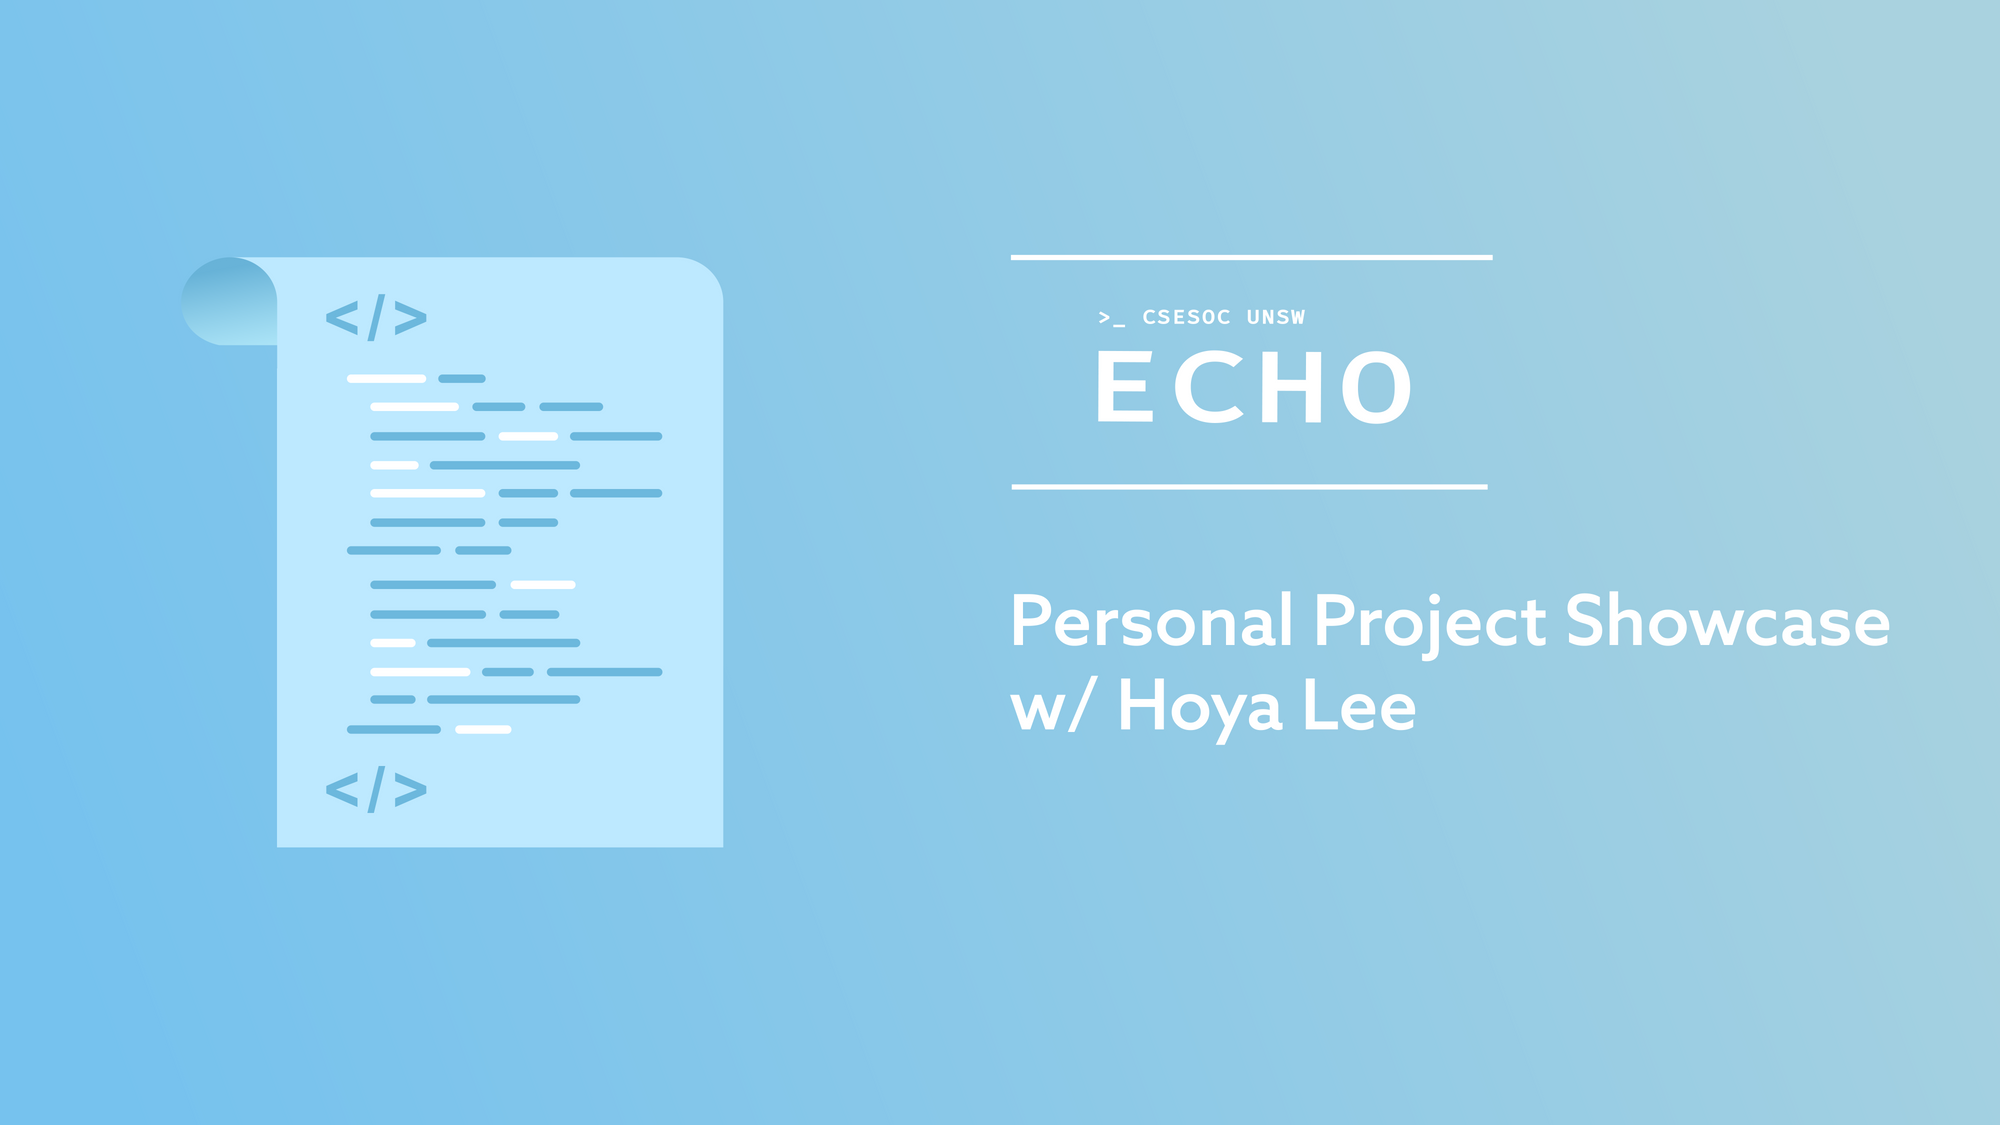 Personal Project Showcase w/ Hoya Lee